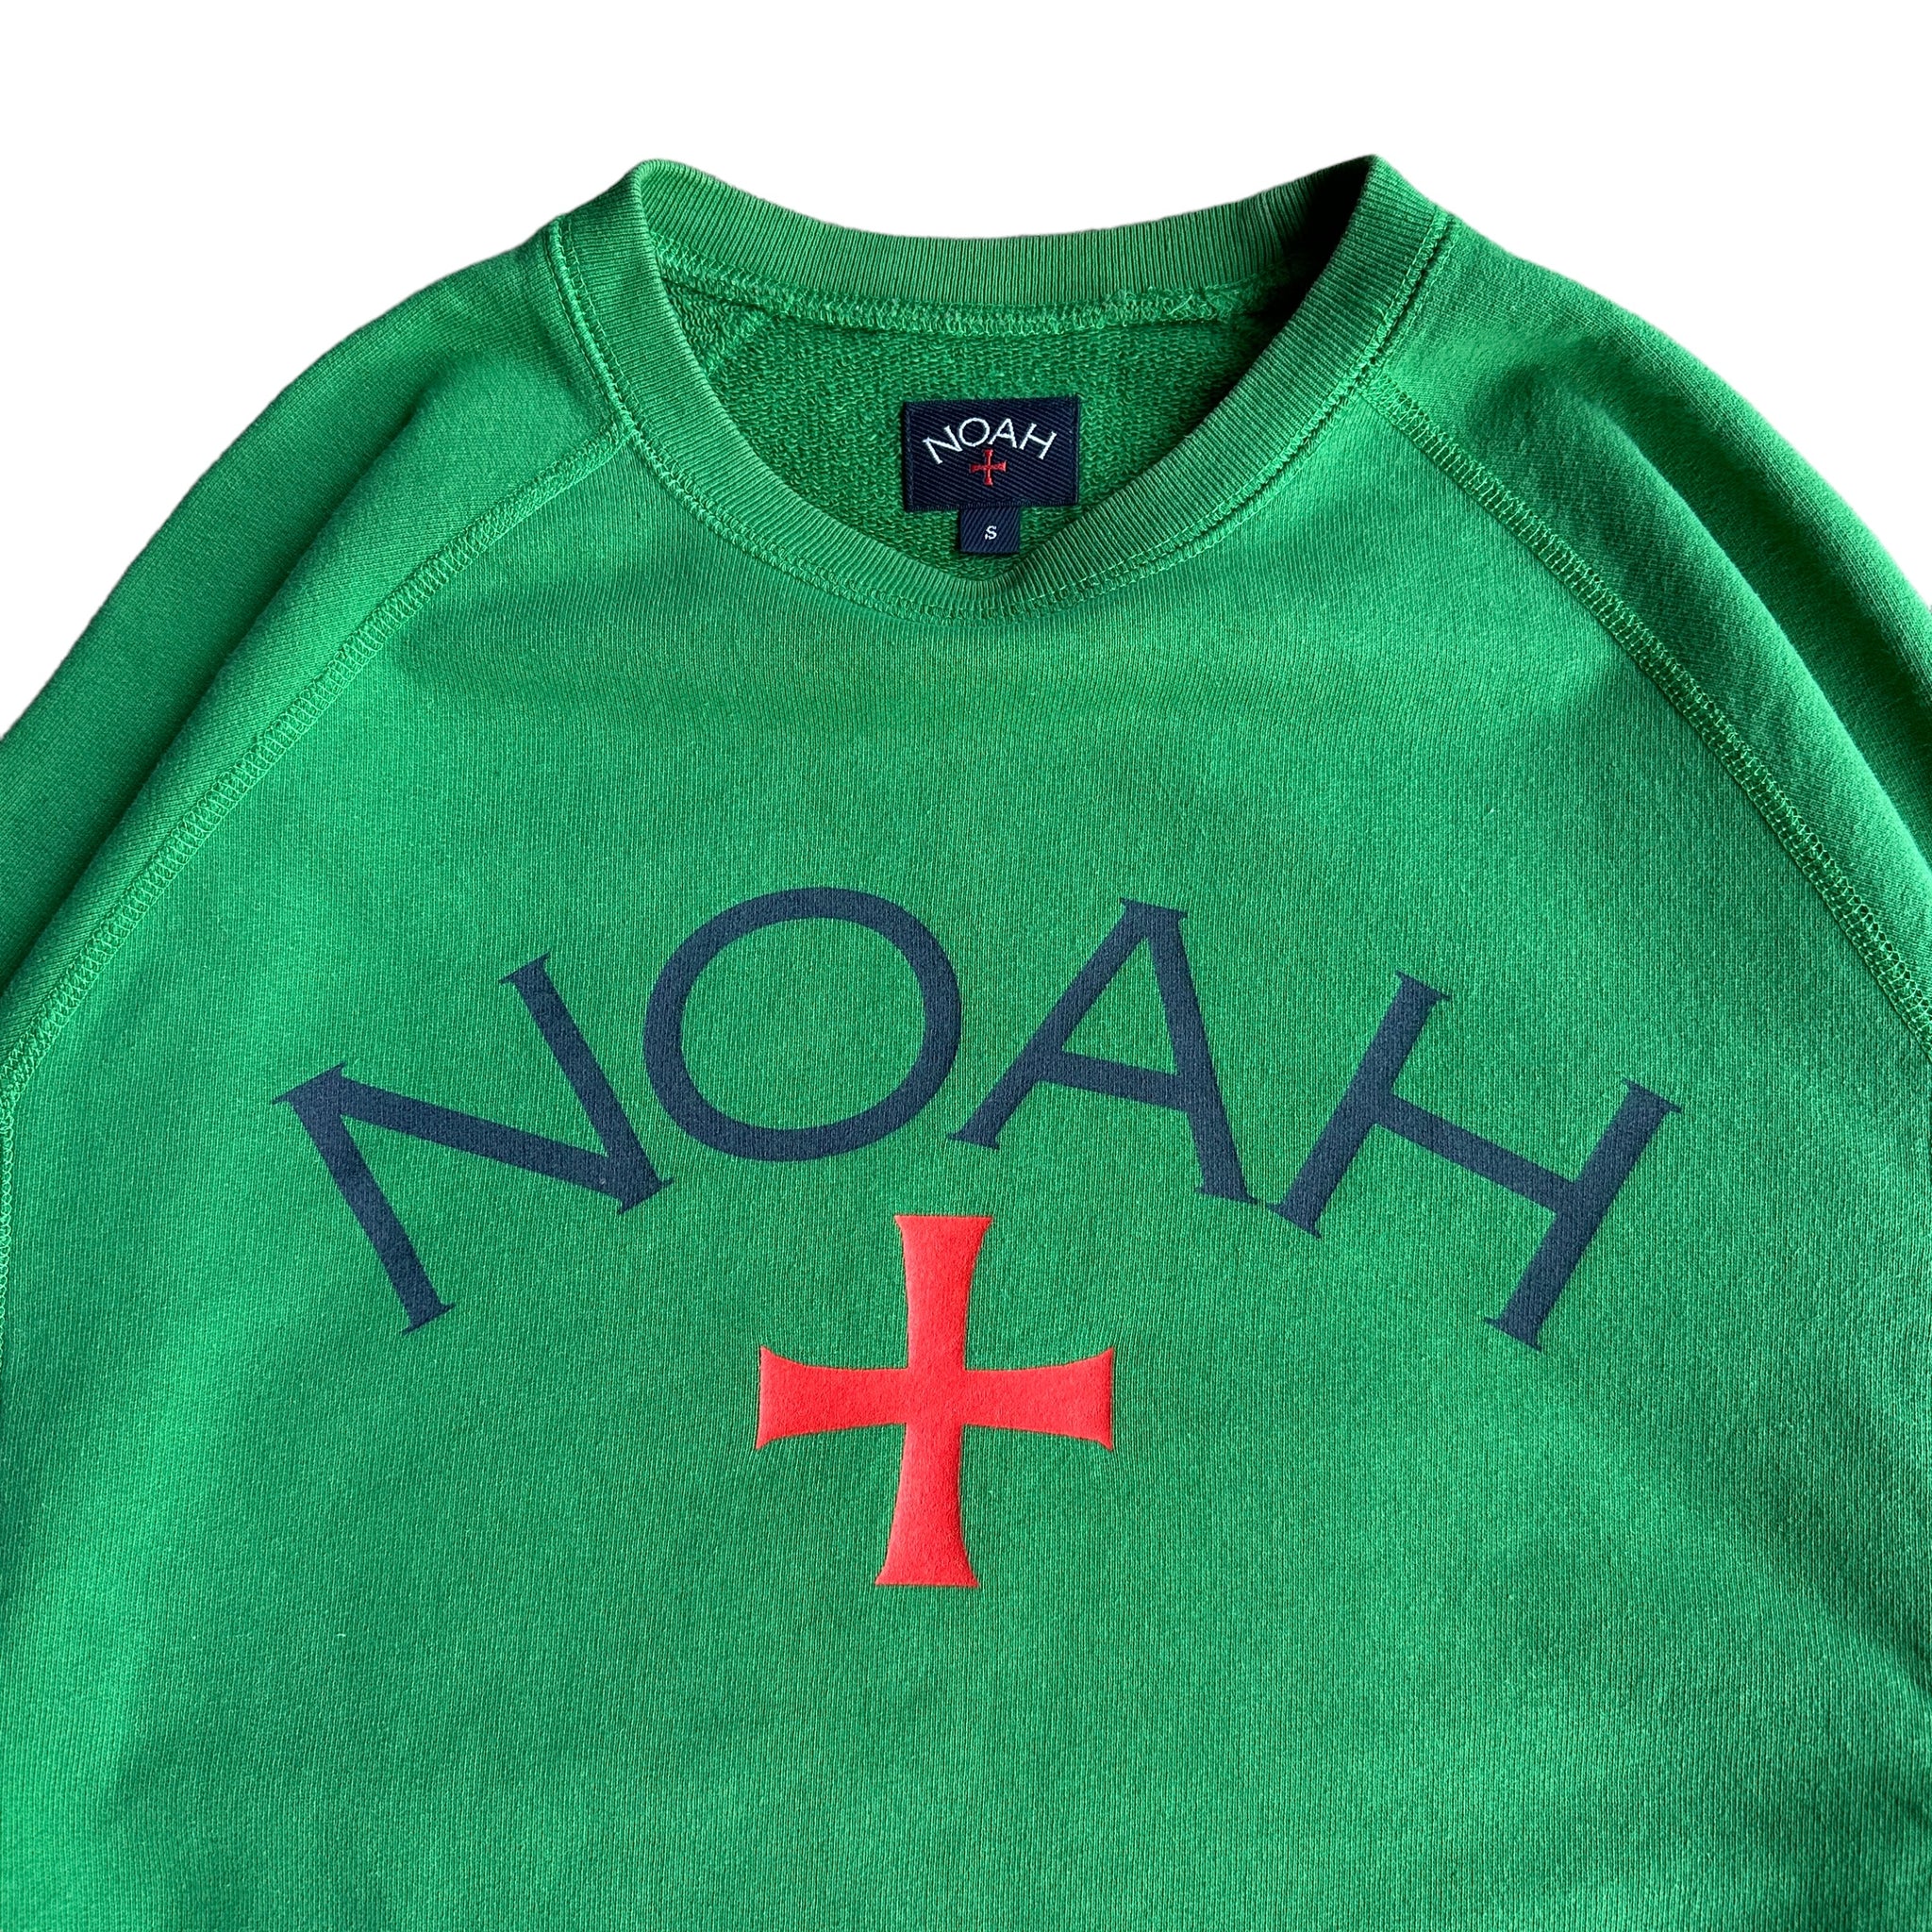 Noah core logo jelly green crewneck small